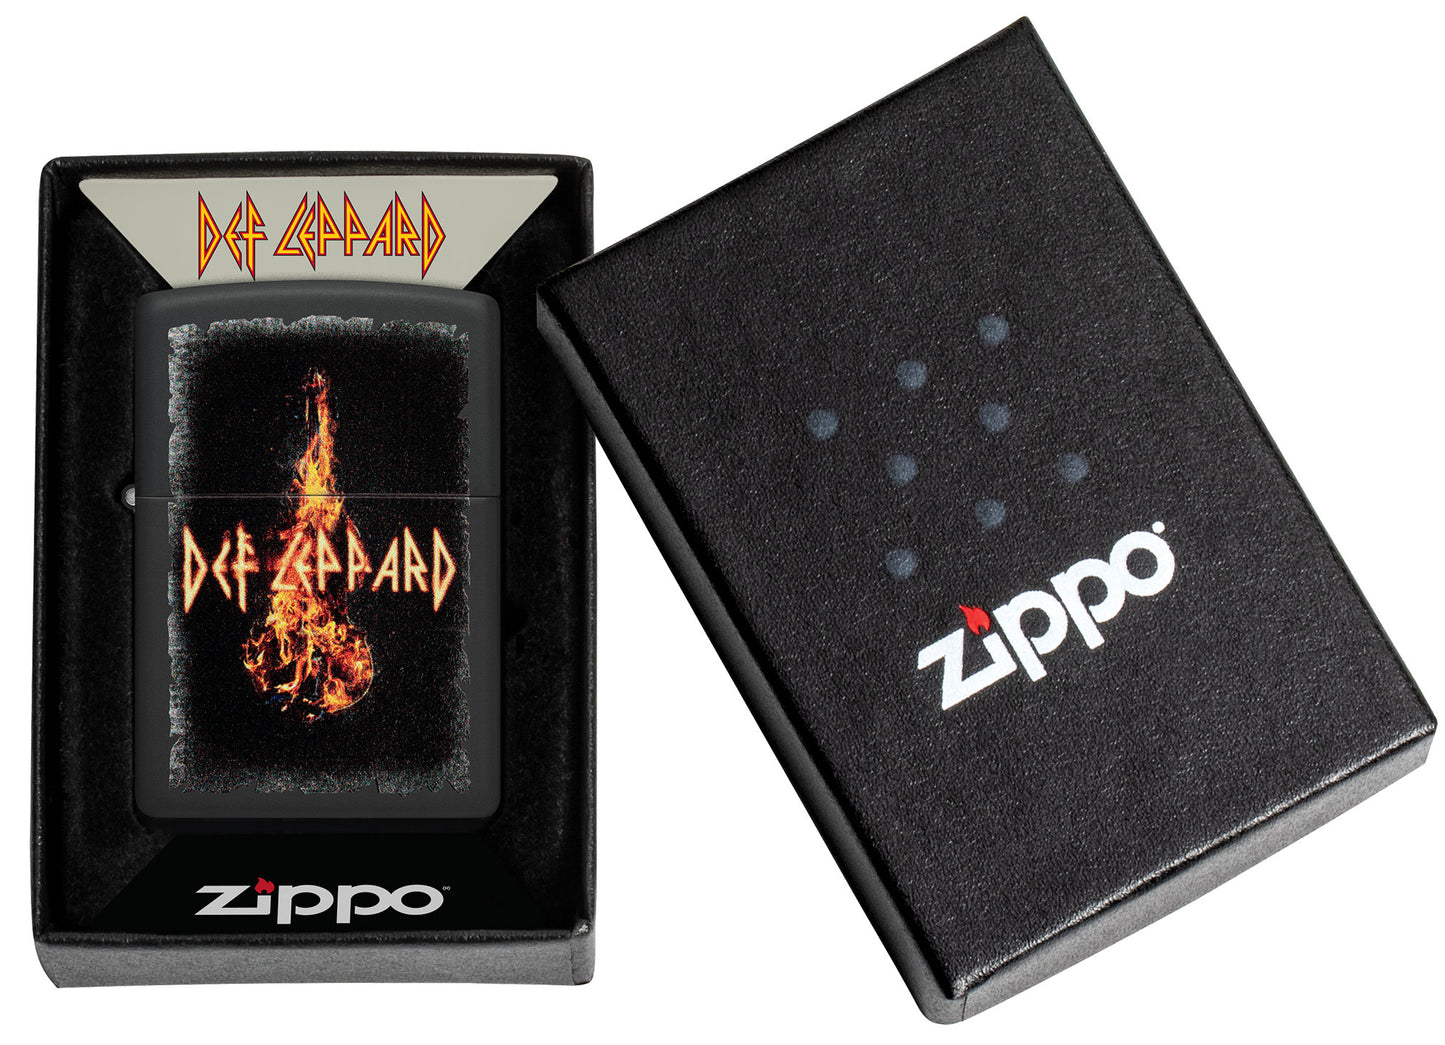 Zippo Def Leppard Burning Violin Black Matte Windproof Lighter in its packaging.